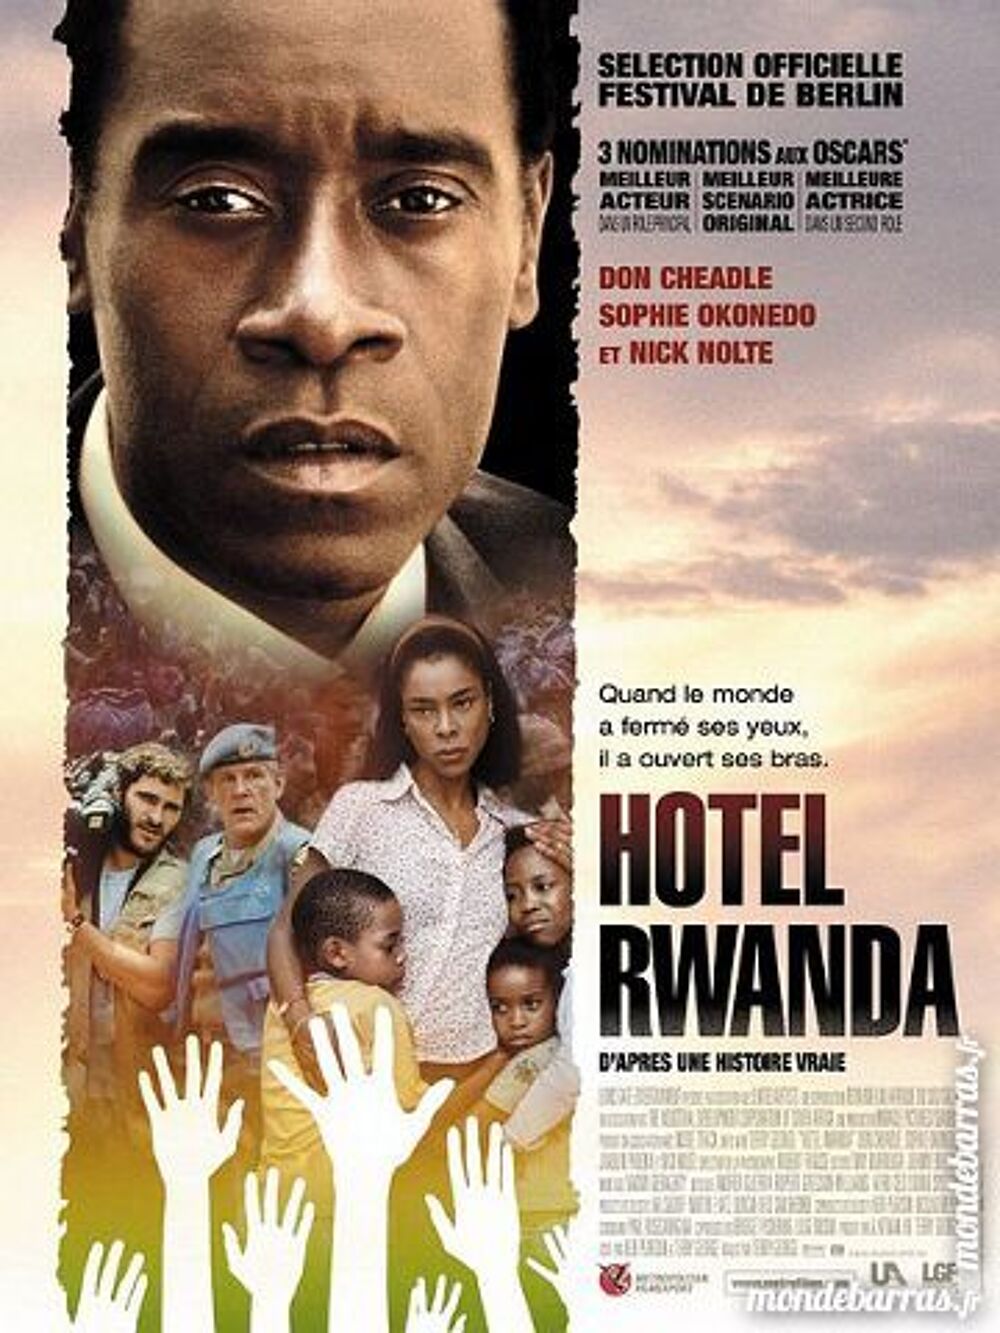 Dvd: Hotel Rwanda (142) DVD et blu-ray